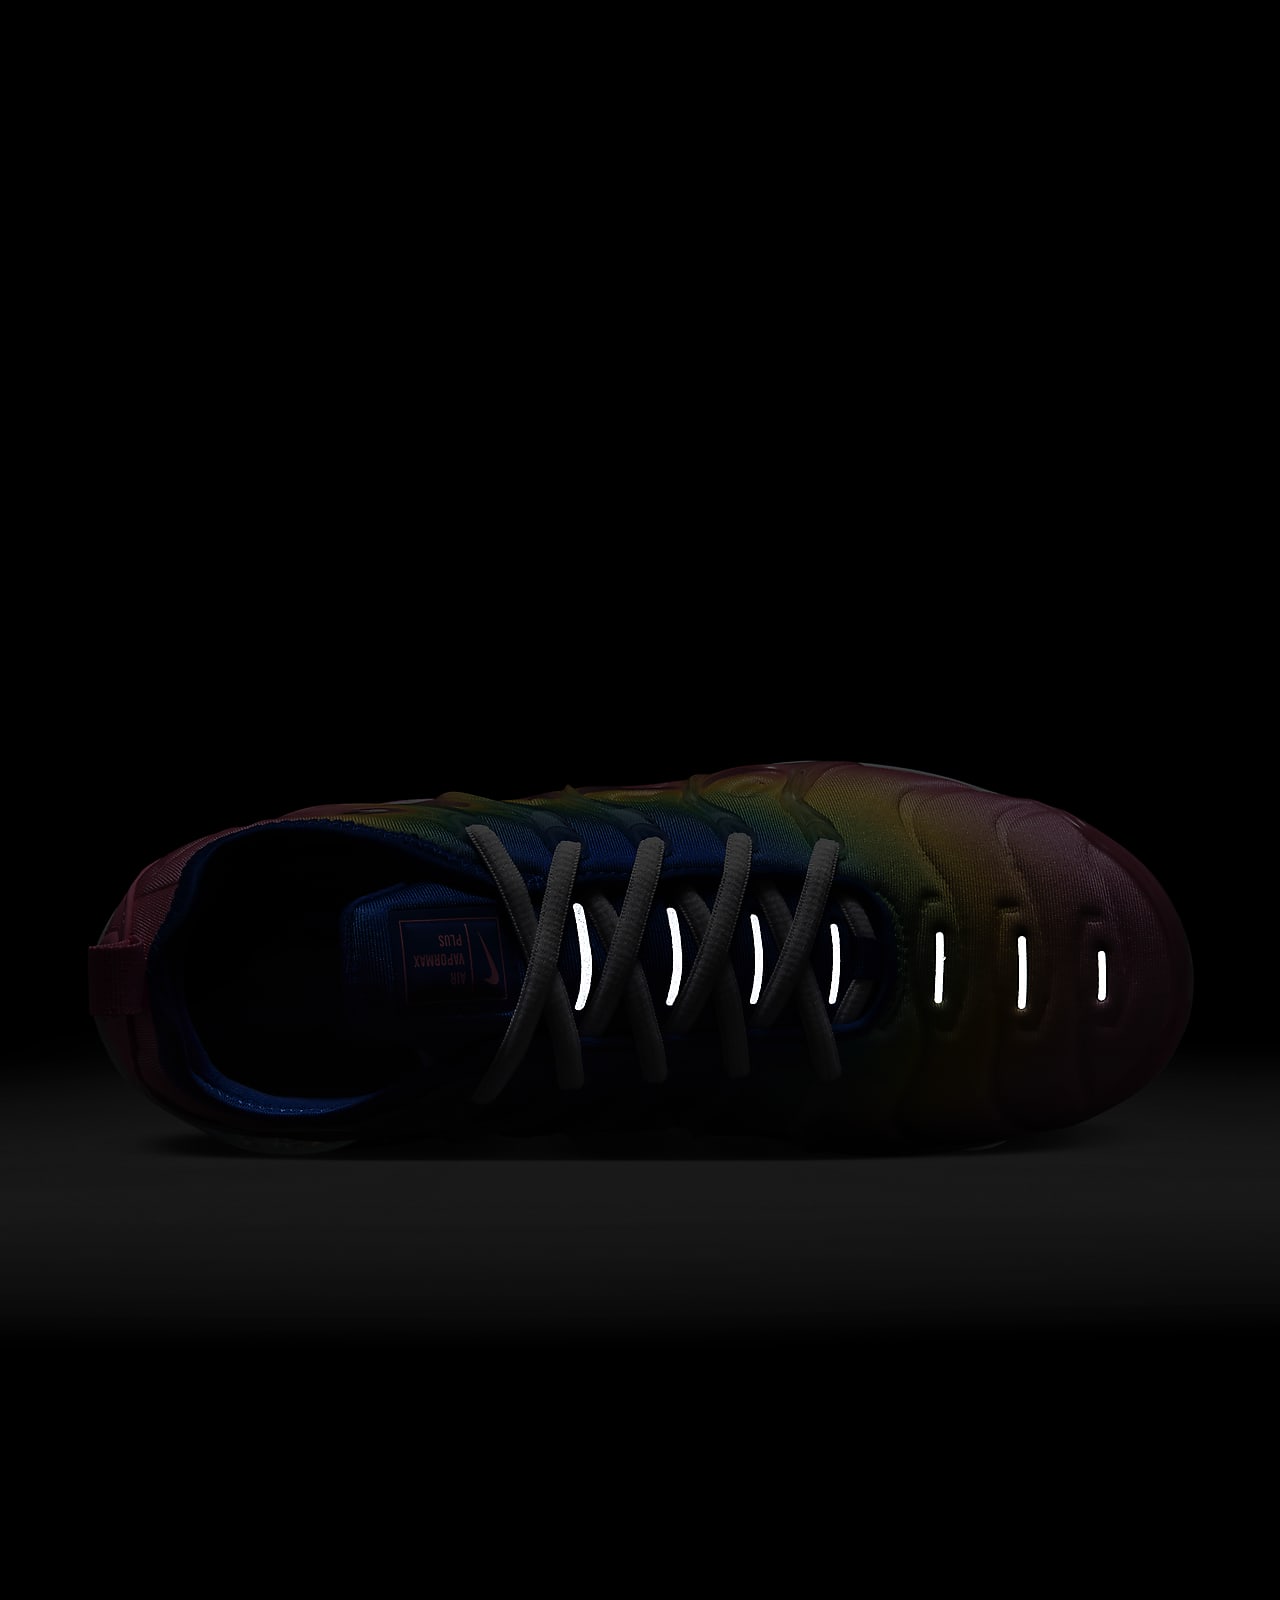 Calzado para mujer Nike Air Plus. Nike.com